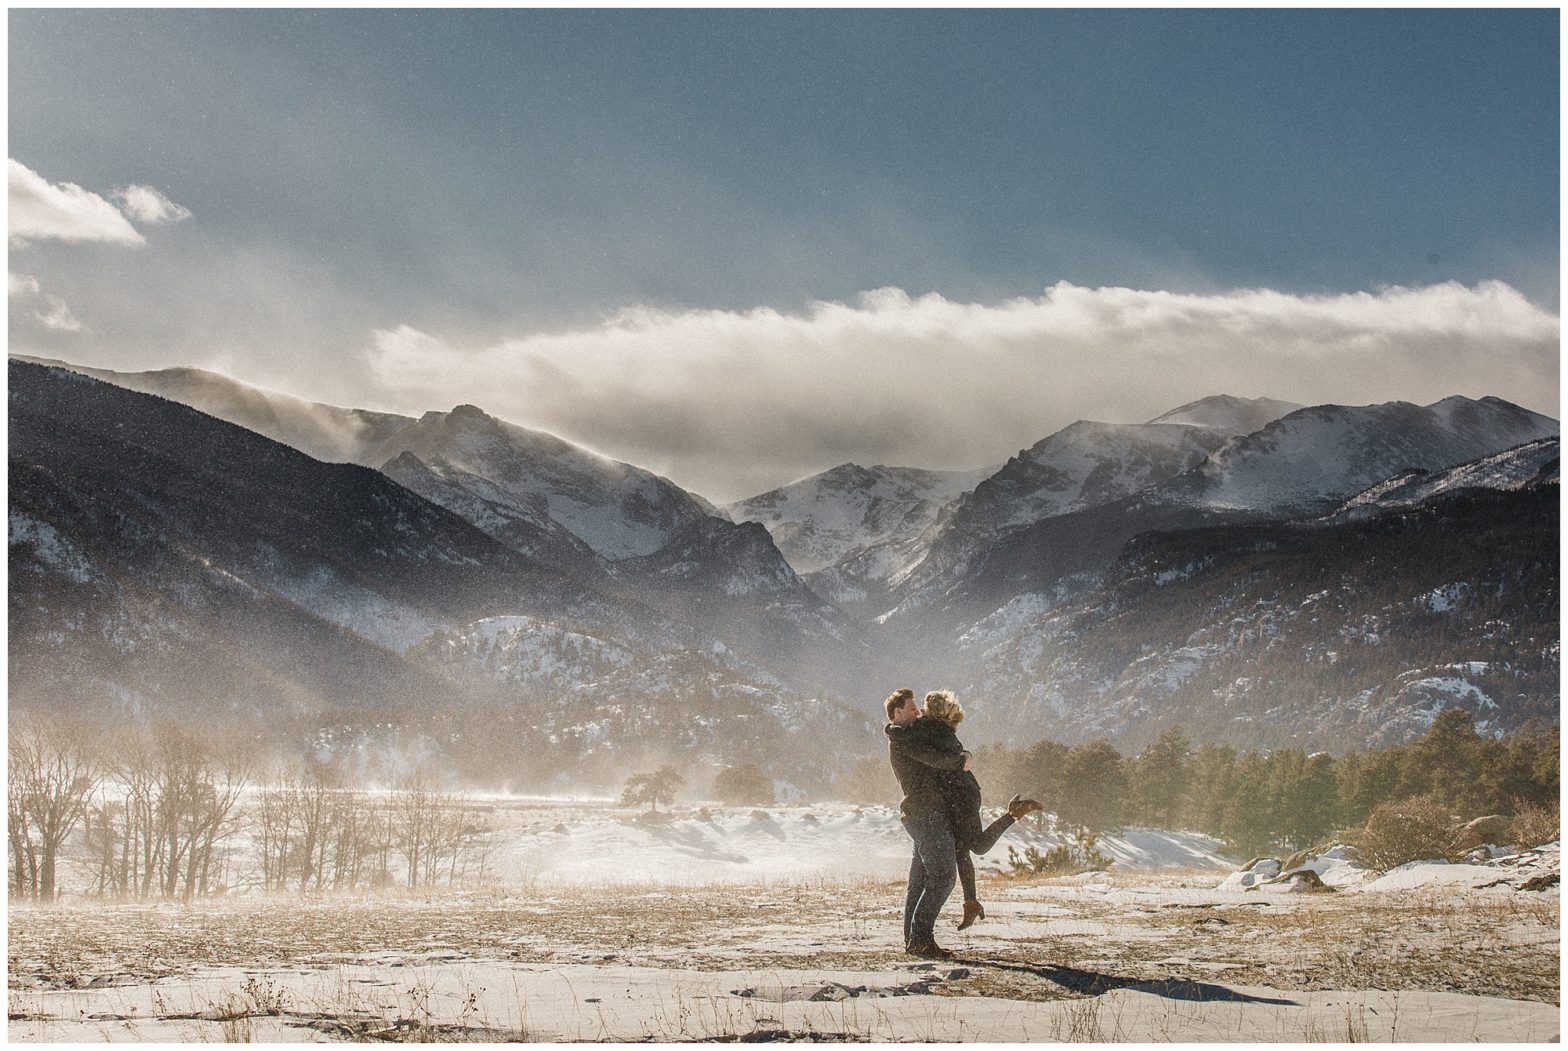 Rocky Mountain national park engagement photos